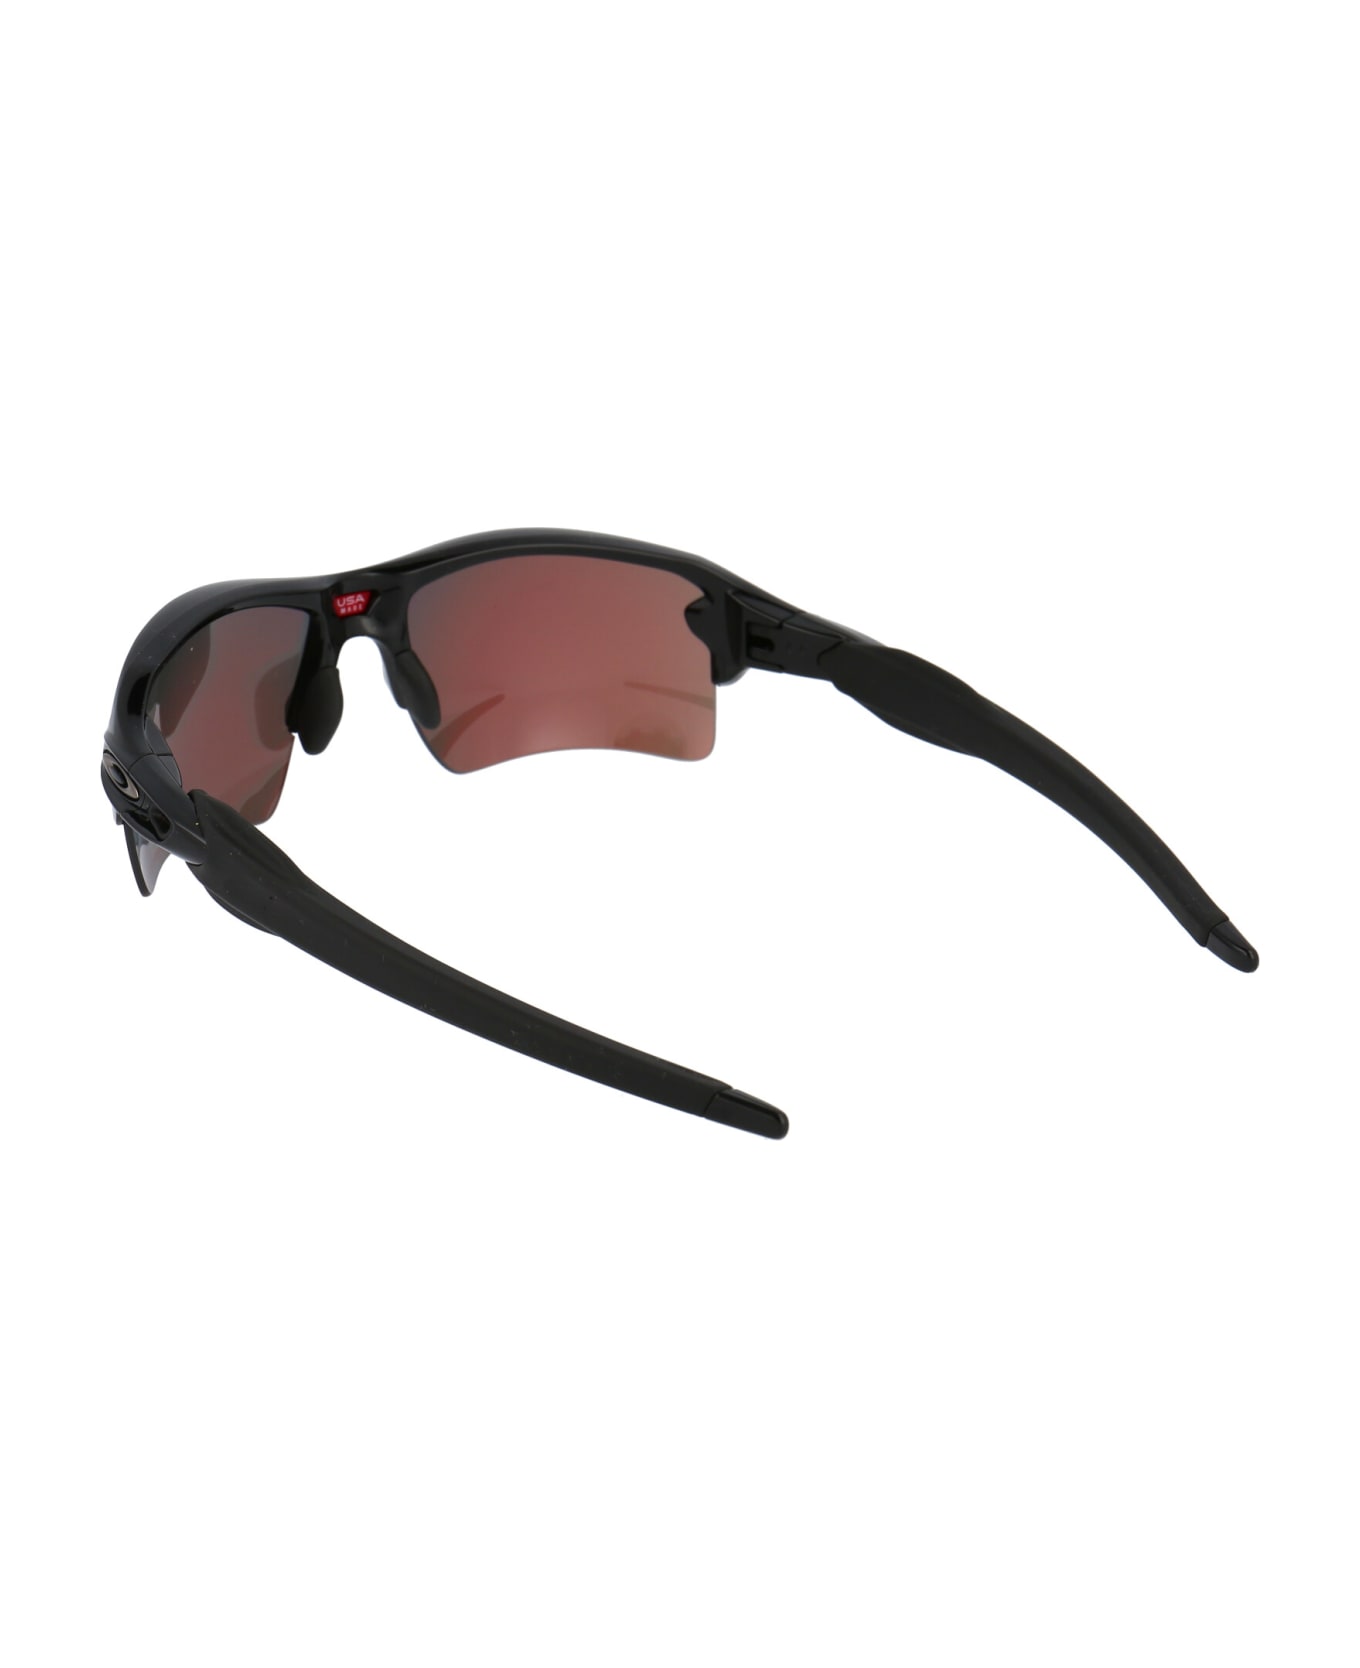 Oakley Flak 2.0 Xl Sunglasses - 918891 POLISHED BLACK